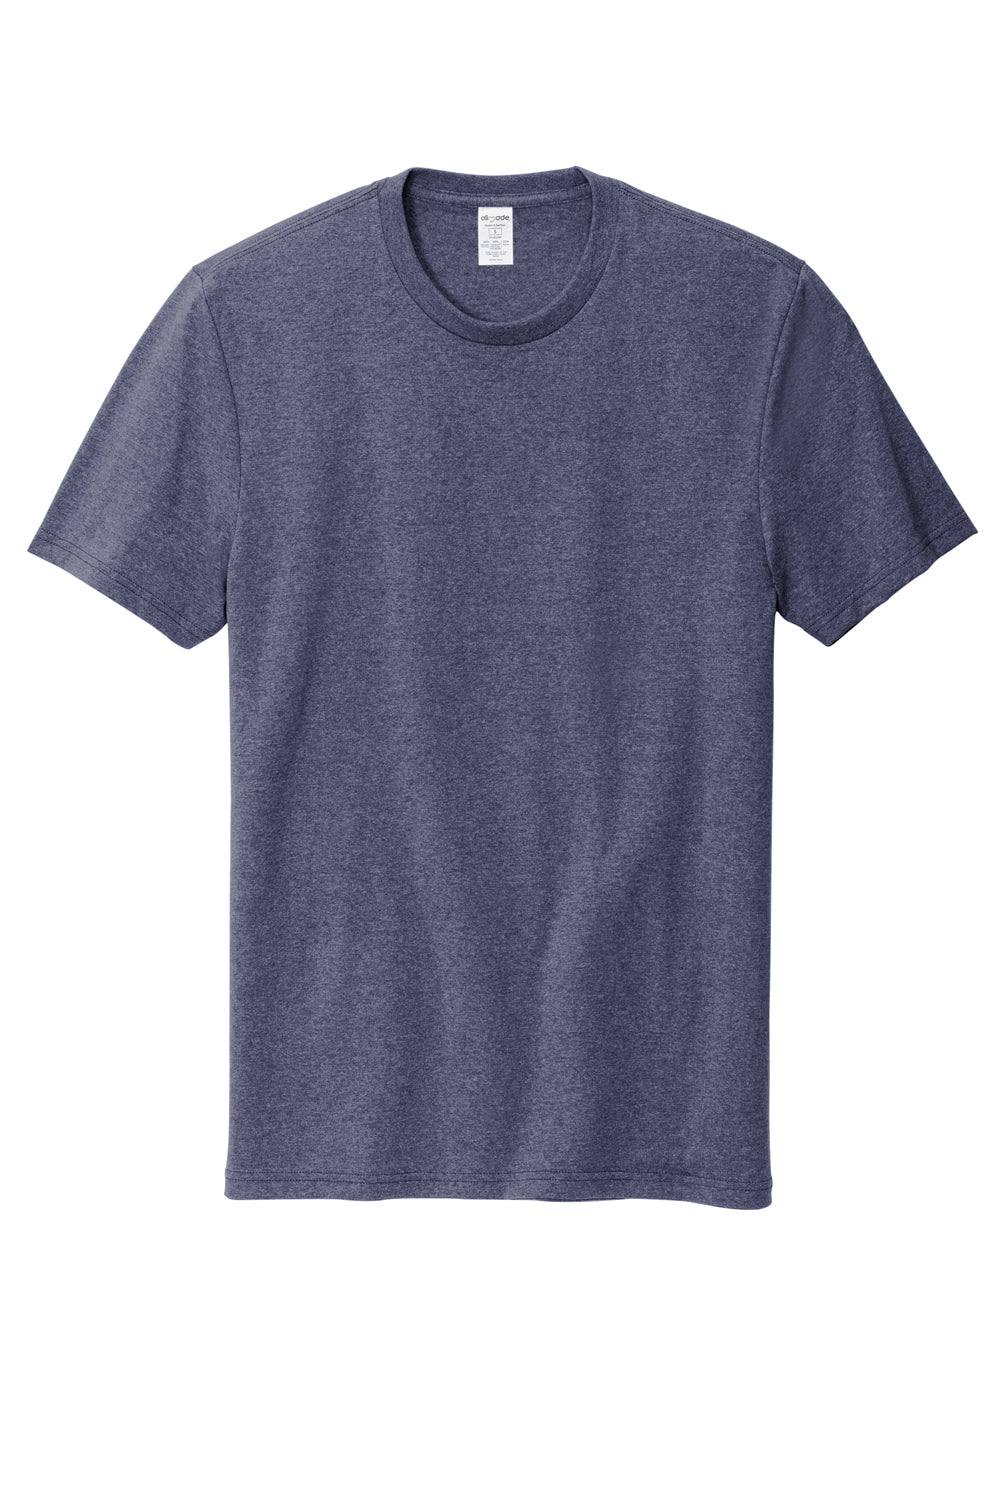 Allmade AL2300 Mens Recycled Short Sleeve Crewneck T-Shirt Heather Navy Blue Flat Front